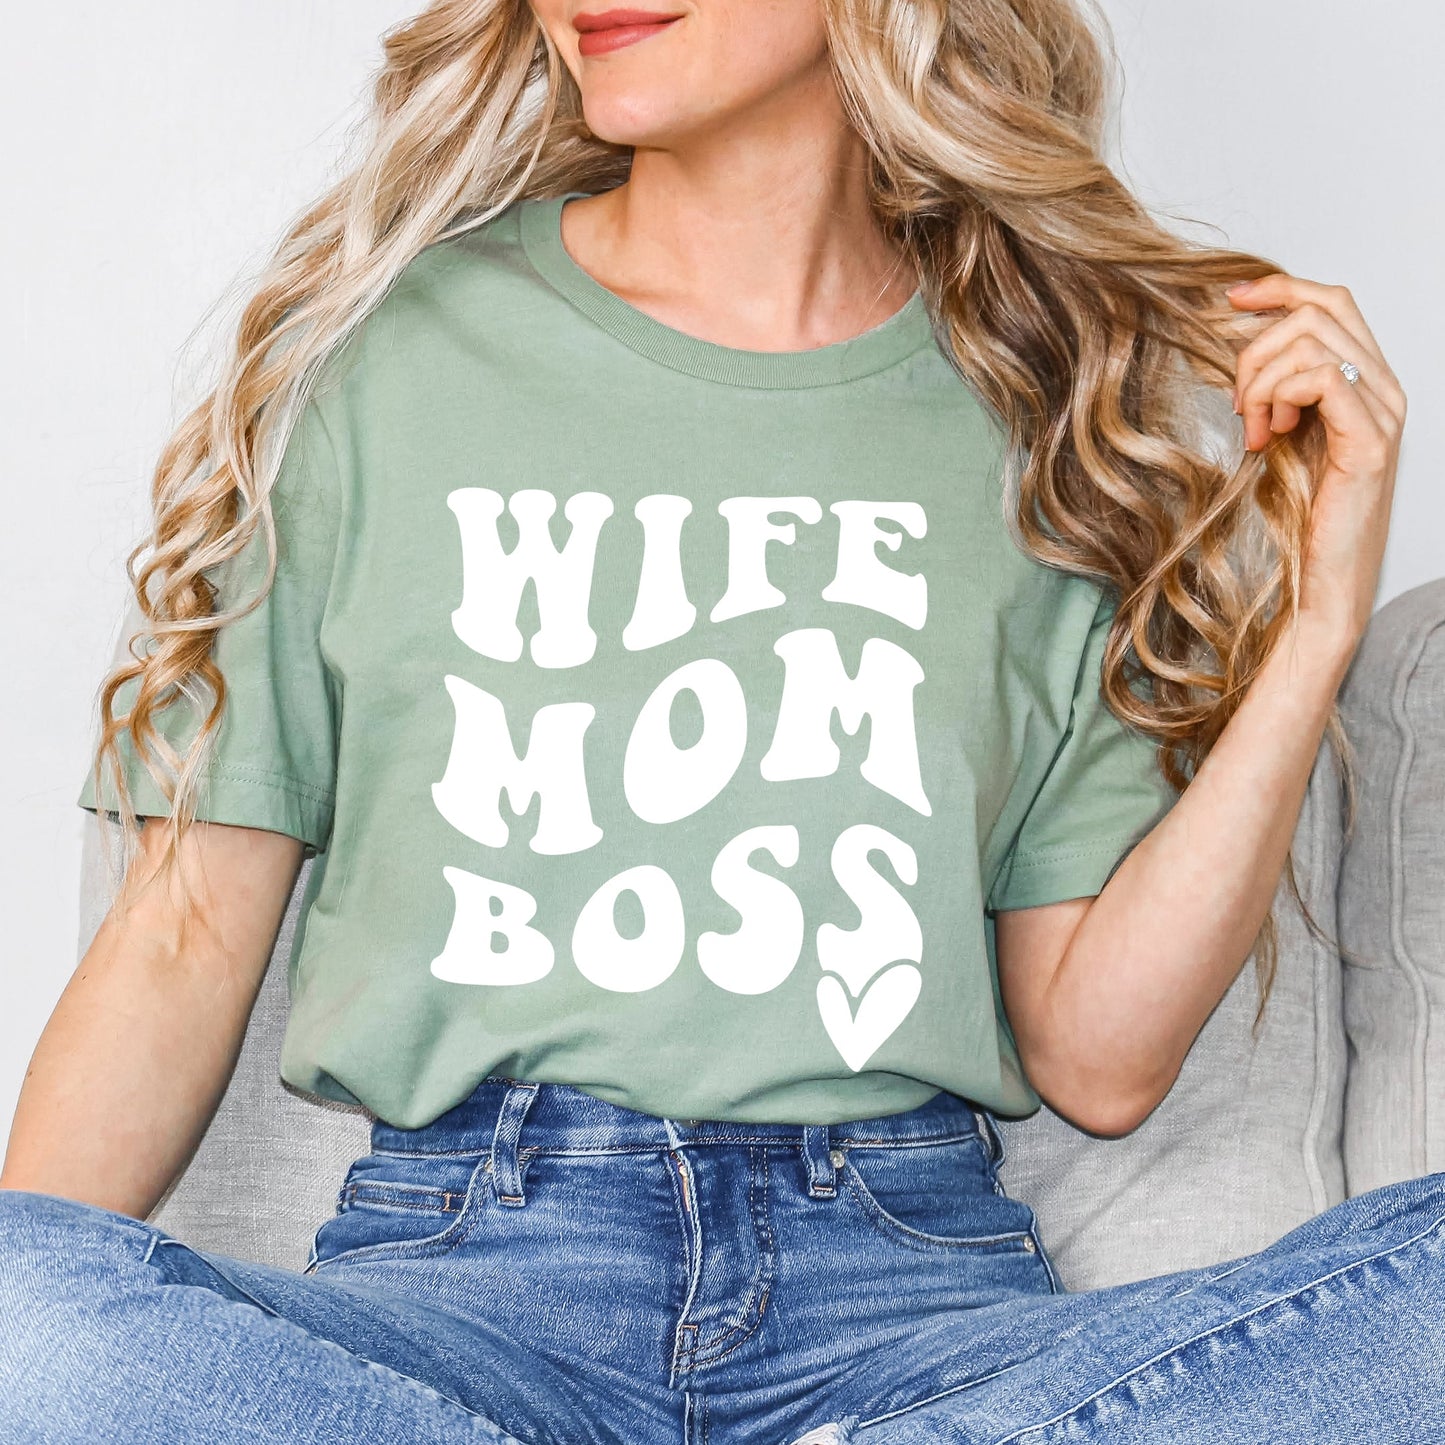 Wife Mom Boss Wavy Heart | Short Sleeve Graphic Tee